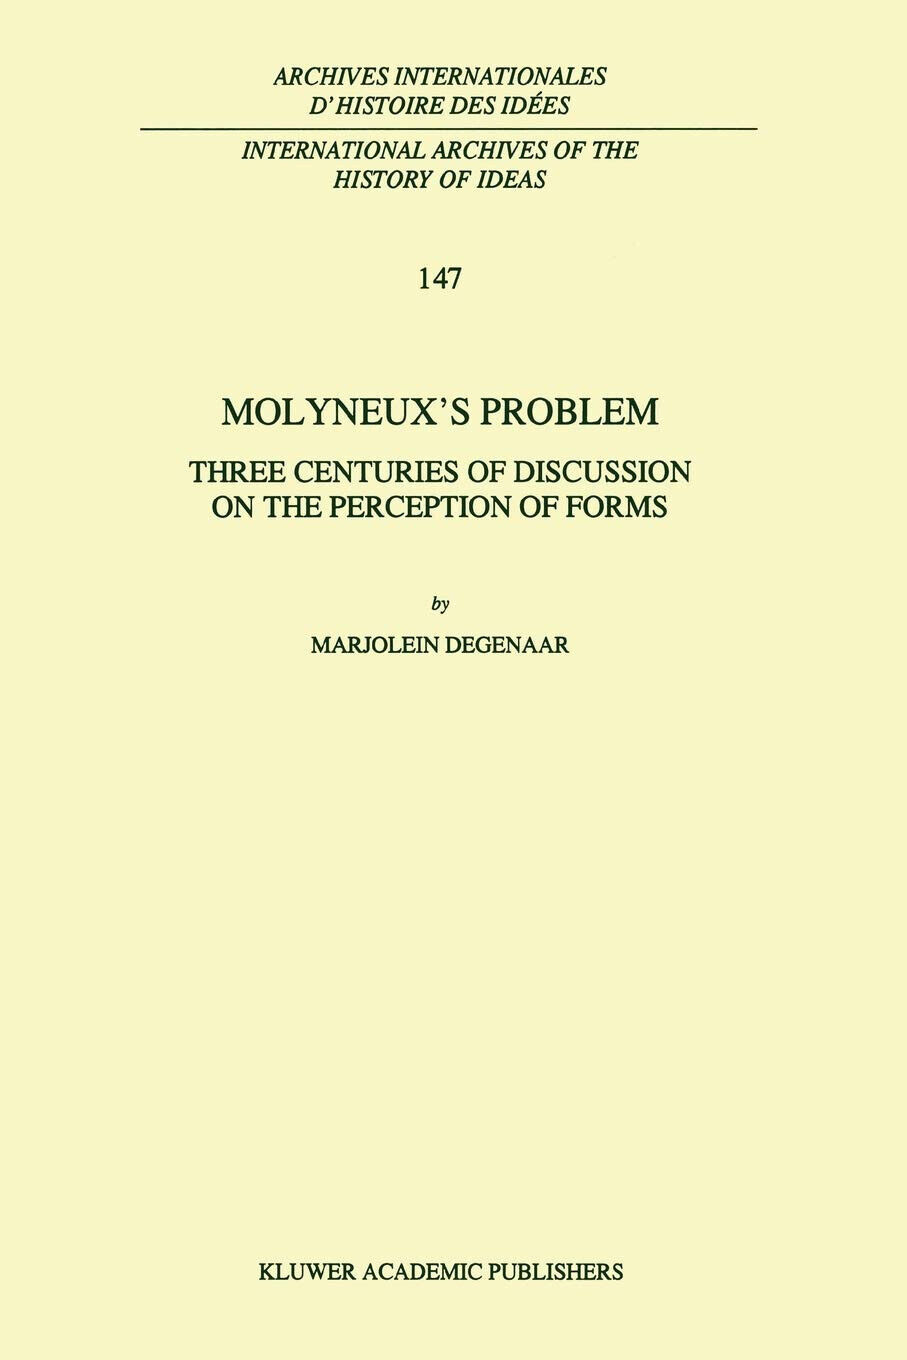 Molyneux s Problem - M. Degenaar - Springer, 2013